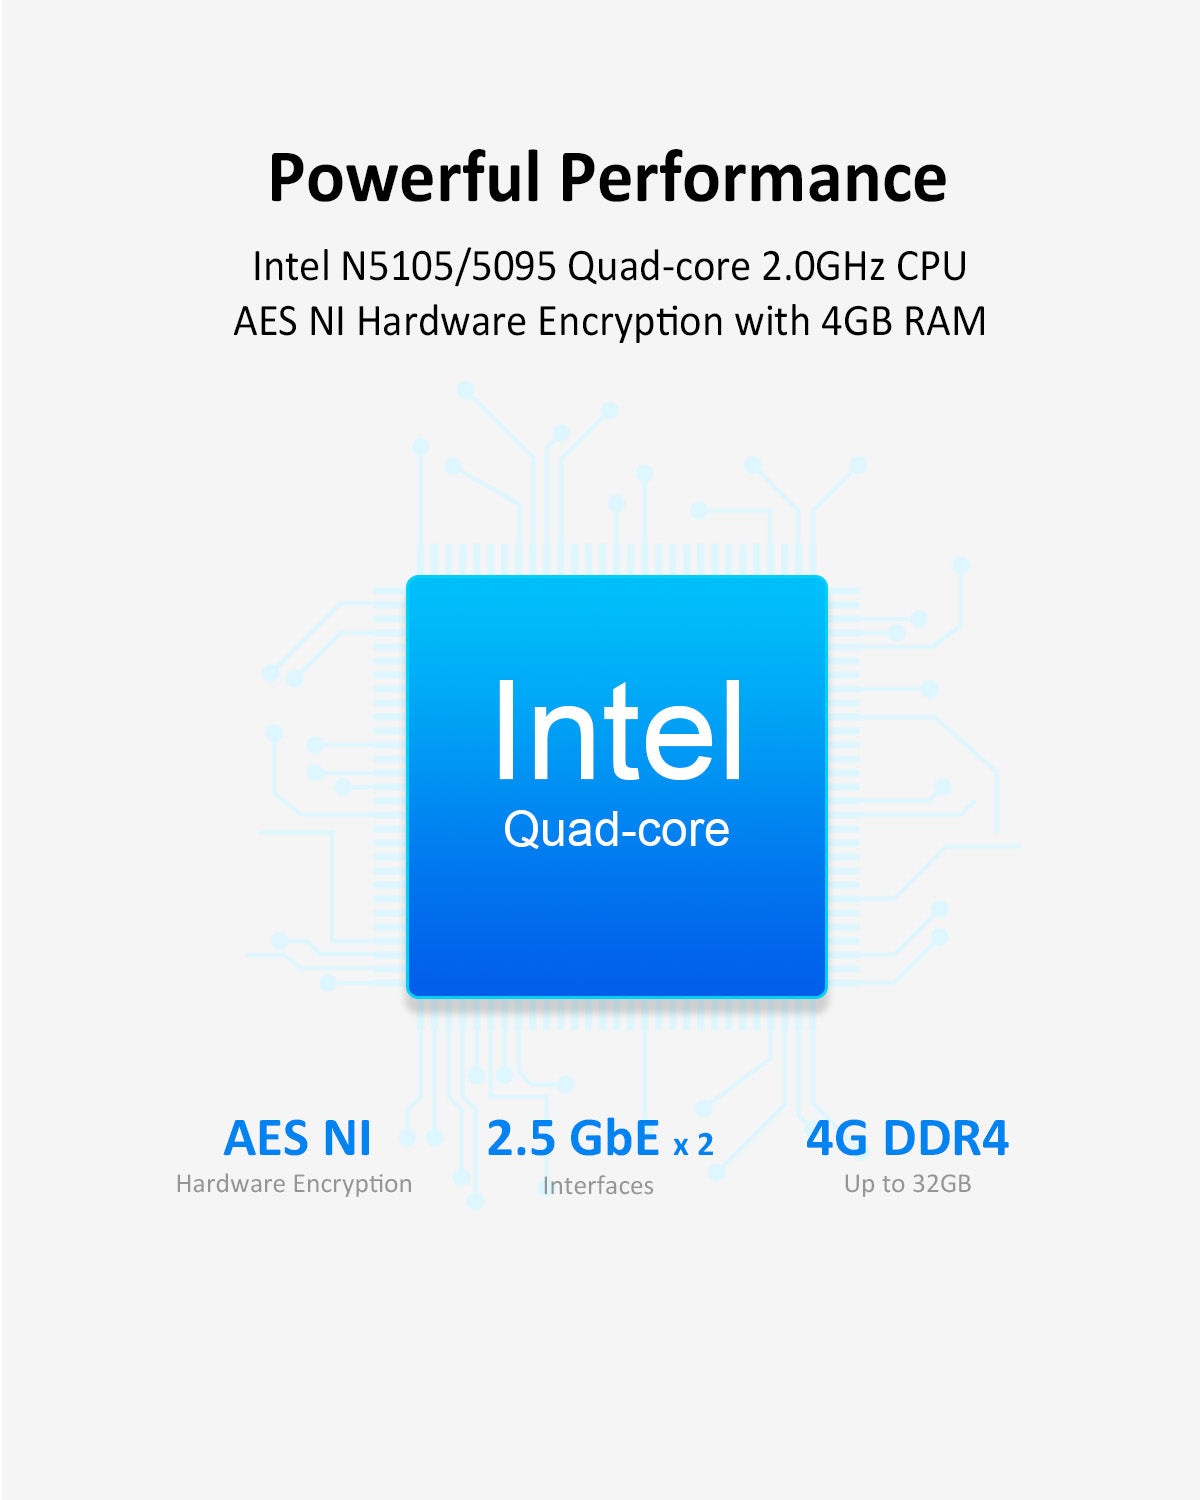 TERRAMASTER U8-423 2.5GbE NAS Rackmount 2U 8-Bay High Performance for SMB with Intel Quad-core CPU, 4GB DDR4, 2.5GbE Port x 2, Network Storage Server (Diskless)